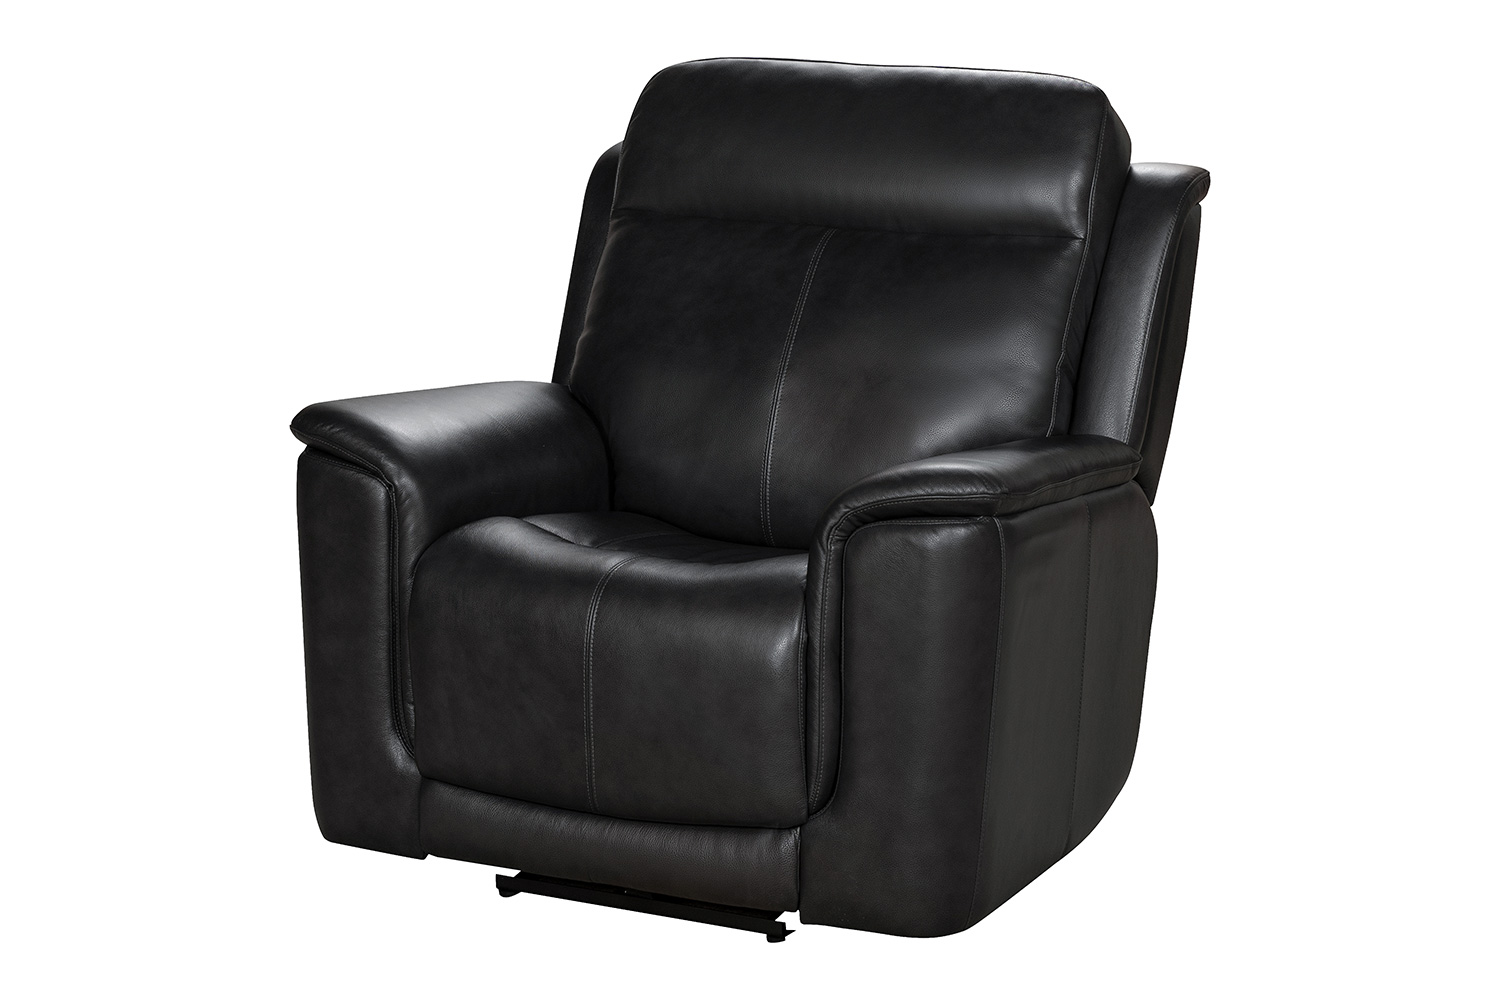 Barcalounger Burbank Power Recliner Chair with Power Head Rest and Lumbar - Matteo Smokey Gray/Leather match